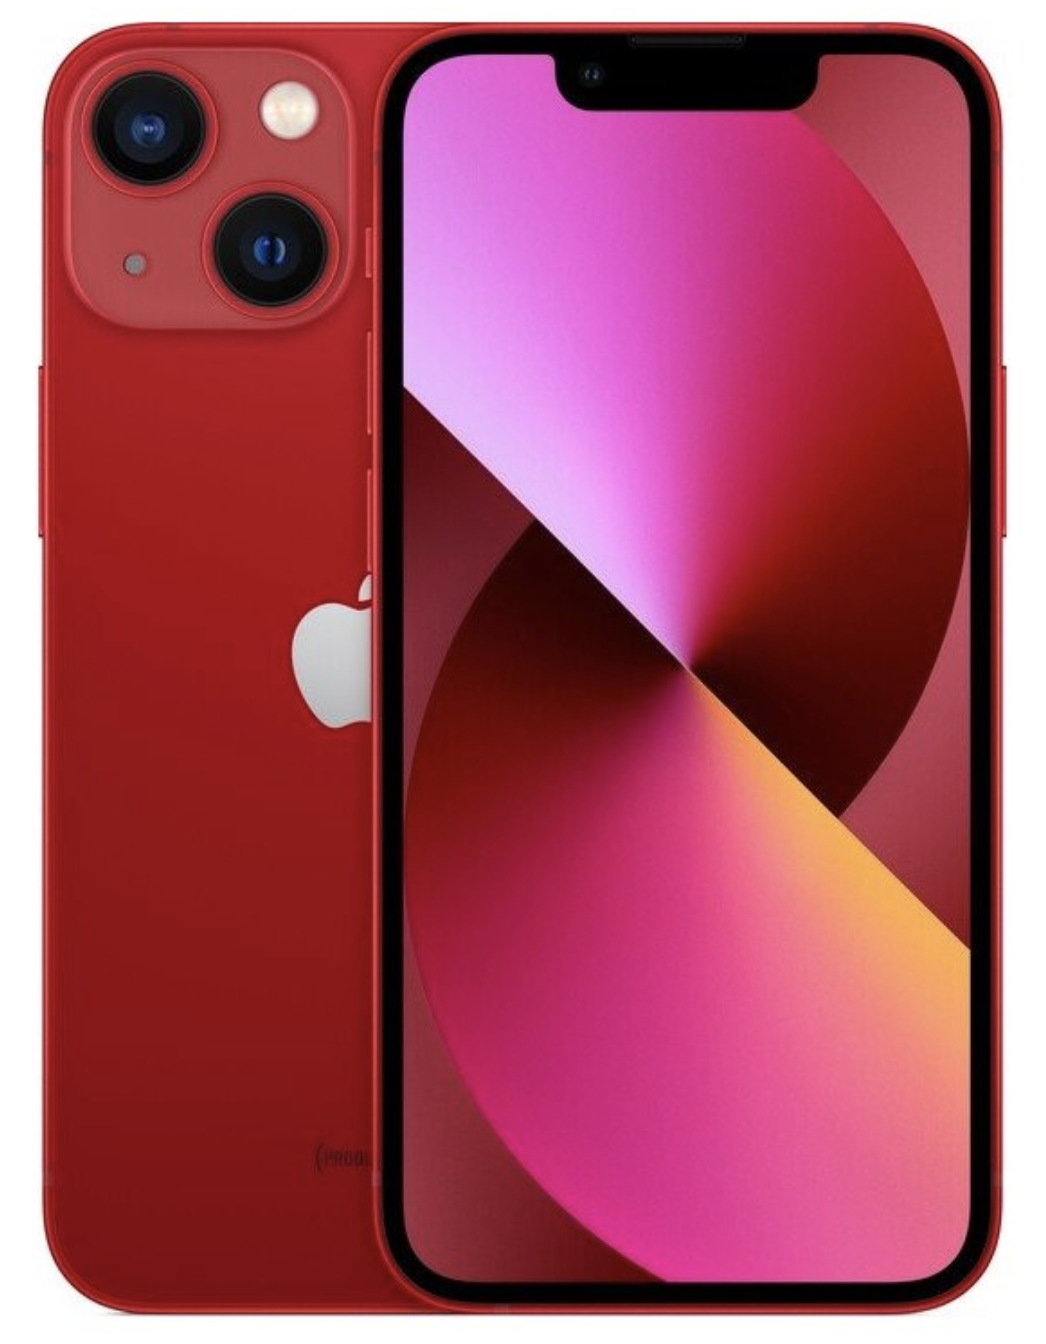 Apple iPhone 13 mini 128GB (PRODUCT)RED - B GRADE